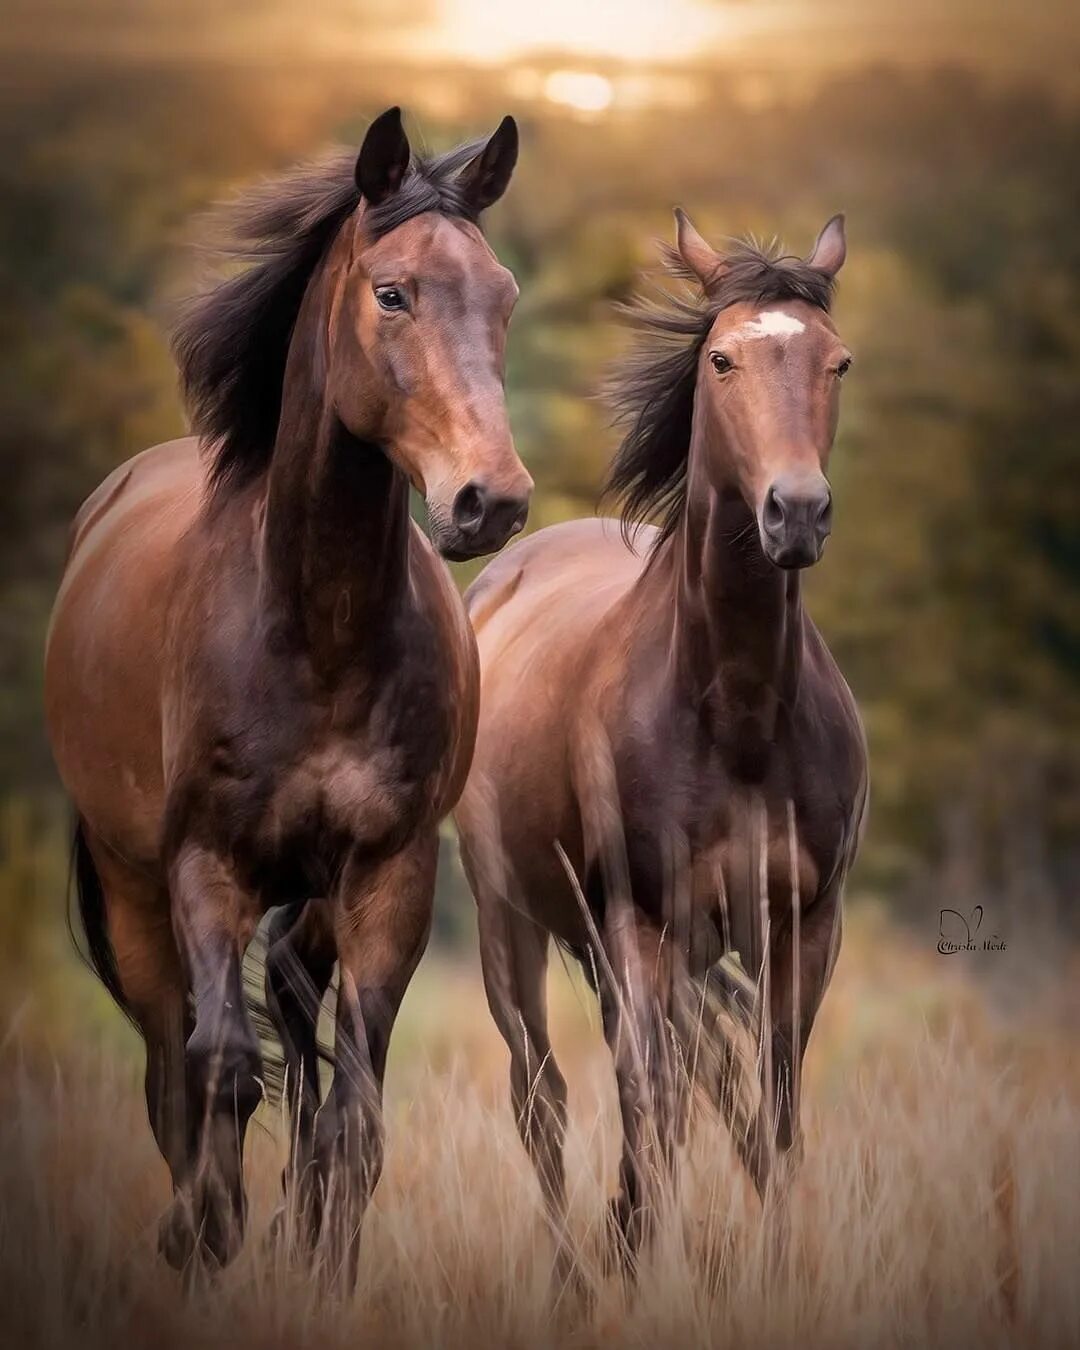 Две лошади. Красивые лошади. Пара лошадей. Любовь лошадей. Horses are beautiful